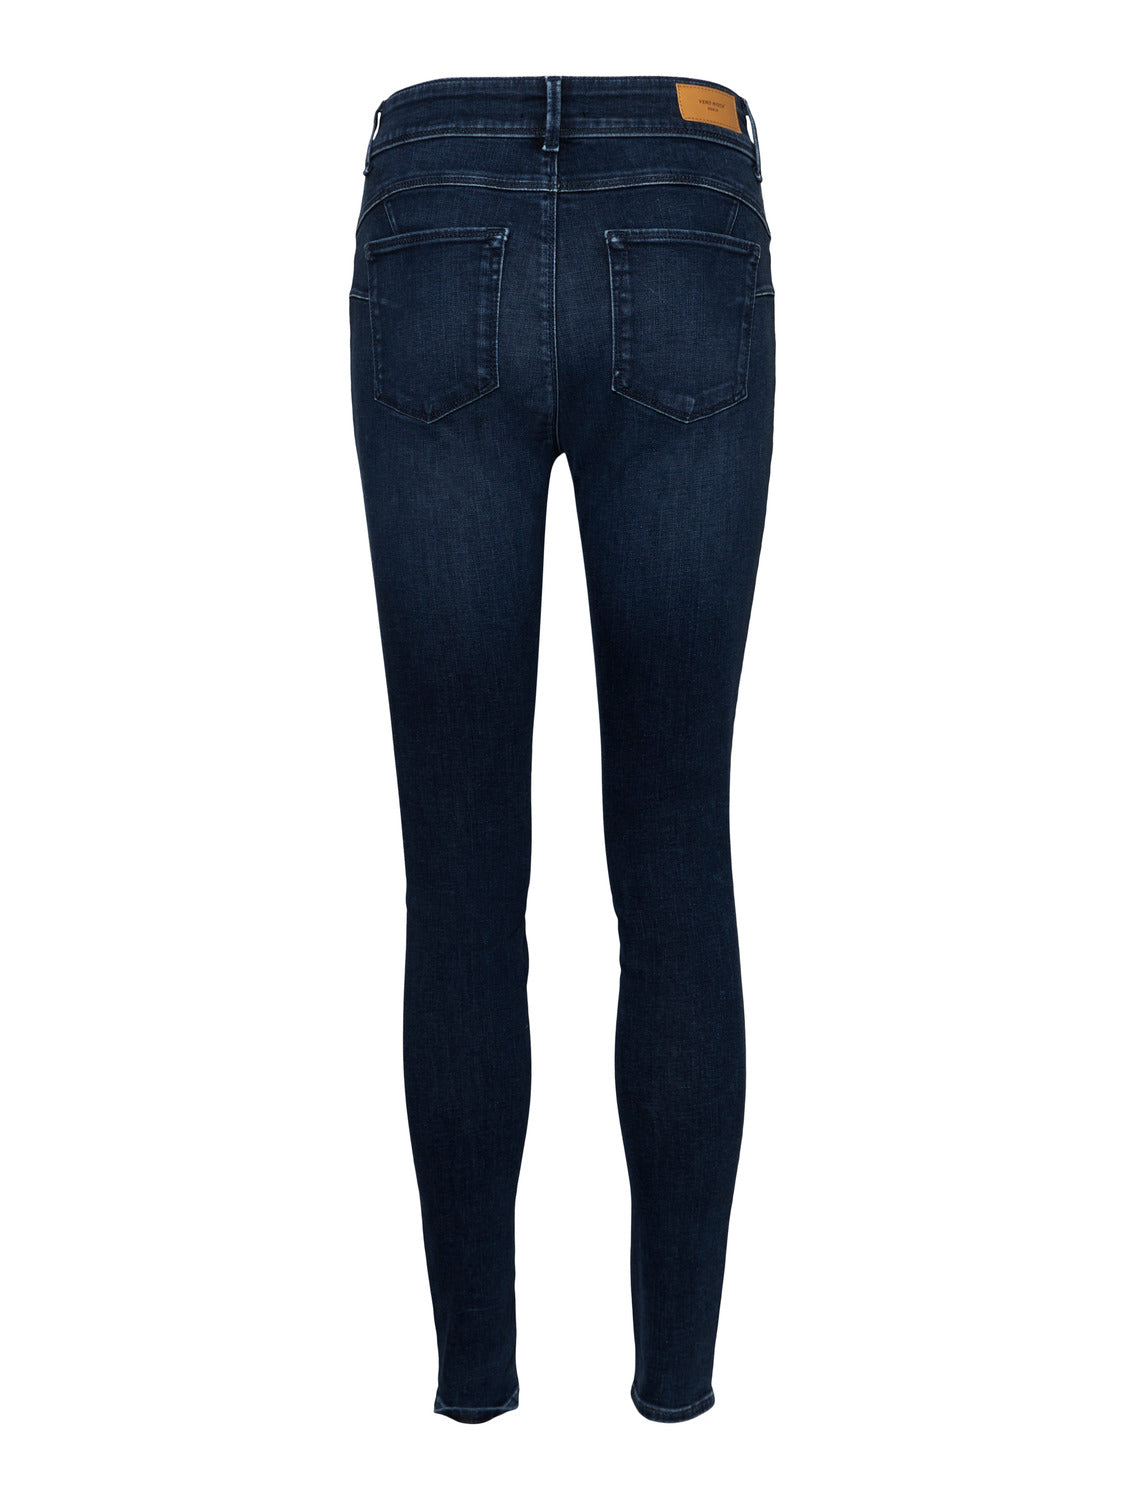 VMEMBRACE Jeans - Dark Blue Denim